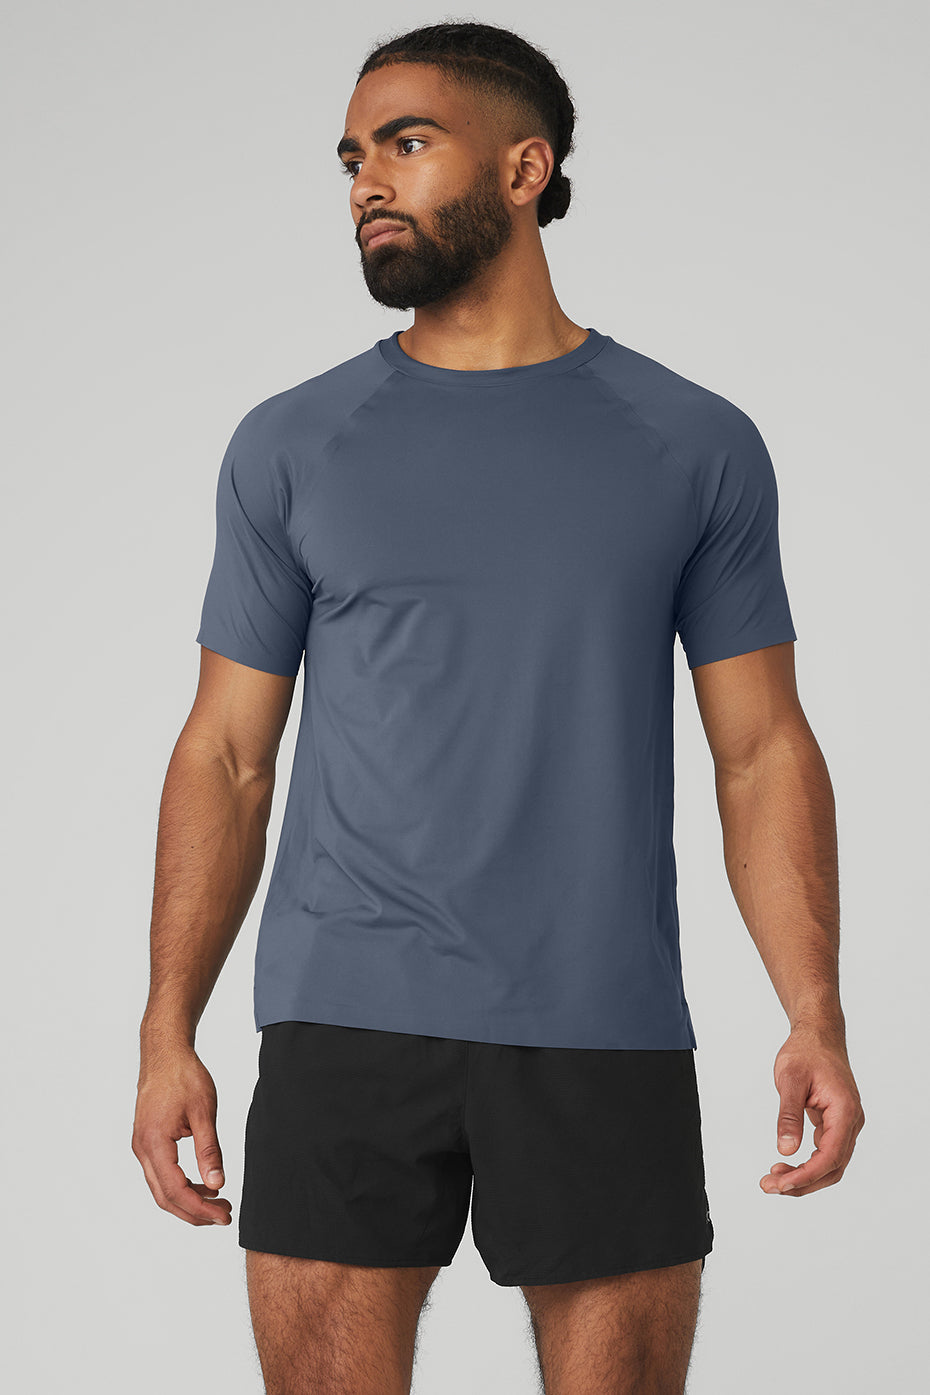 Alo Sport Men's Dri-Blend Short-Sleeve T-Shirt M1005